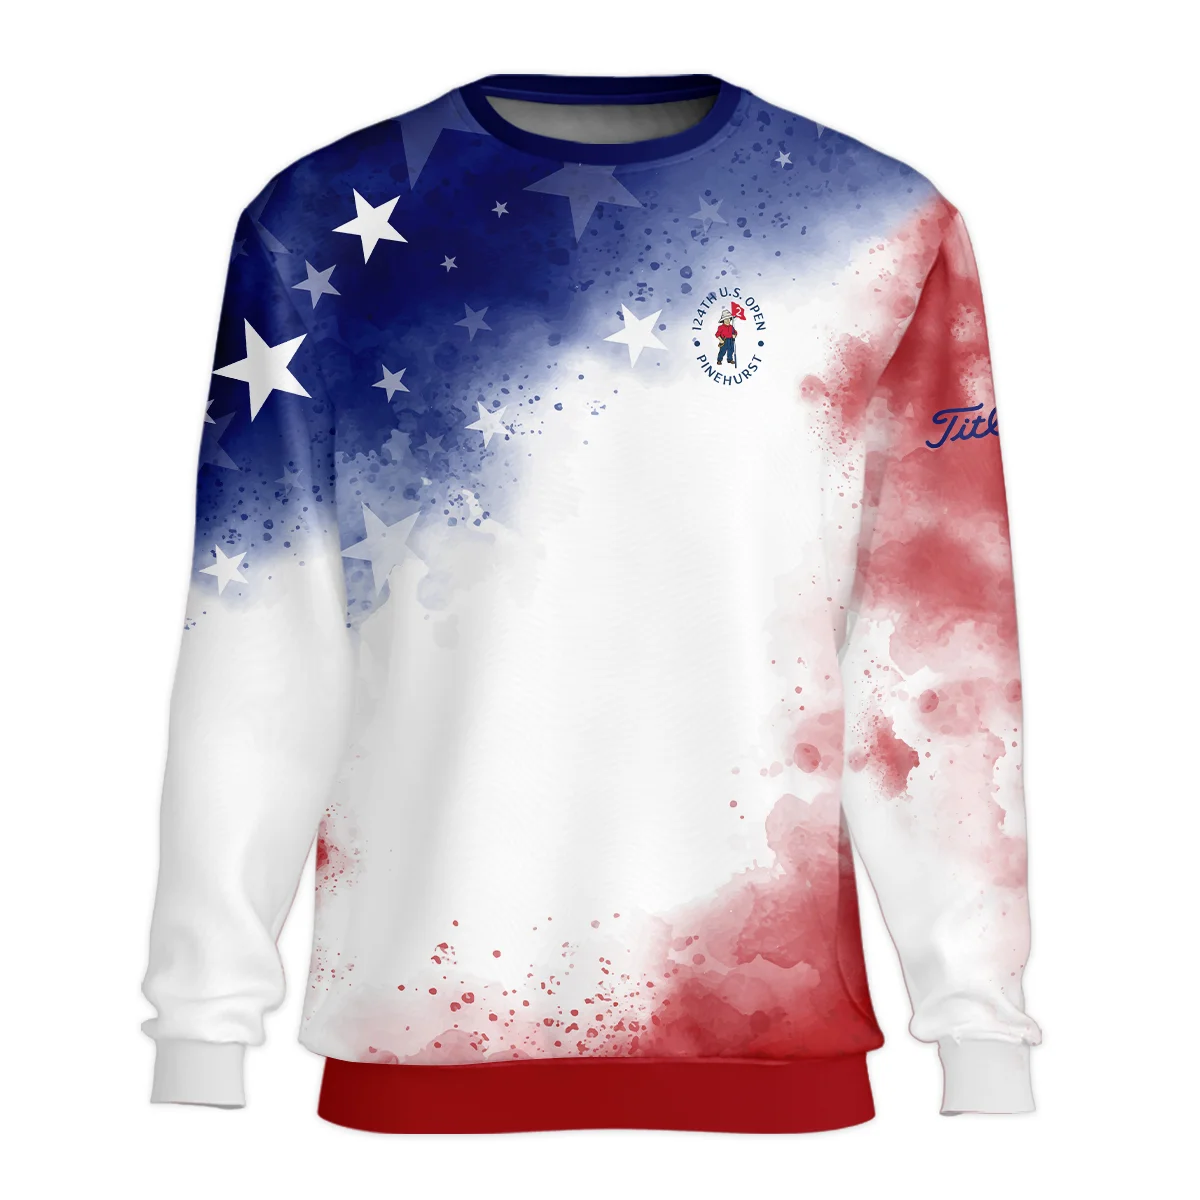 124th U.S. Open Pinehurst Titleist Blue Red Watercolor Star White Backgound Unisex Sweatshirt Style Classic Sweatshirt